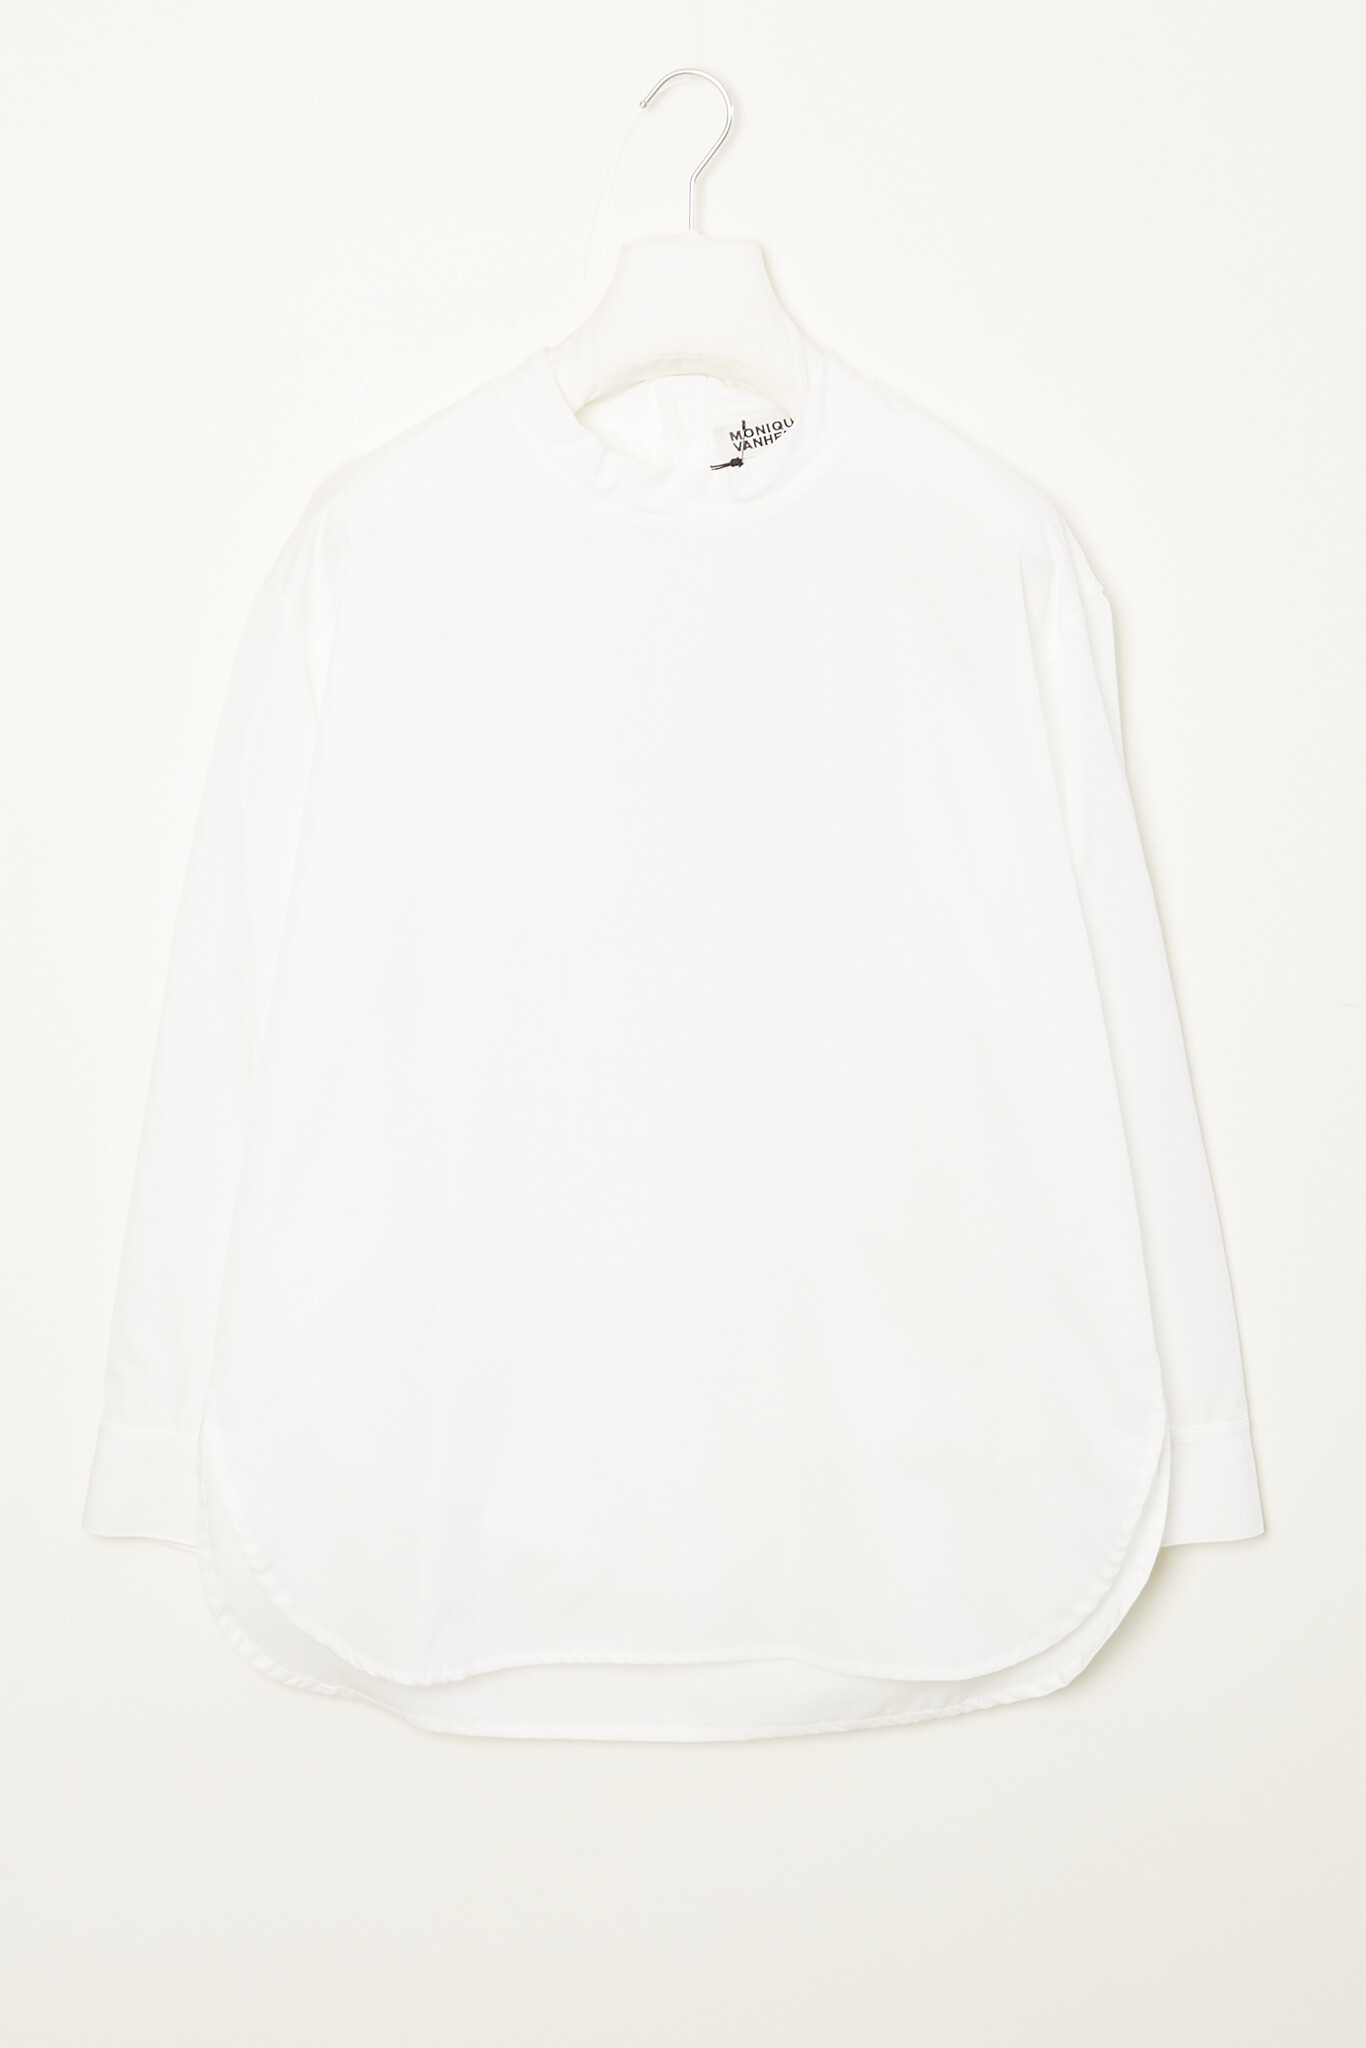 Monique van Heist - The cotton shirt